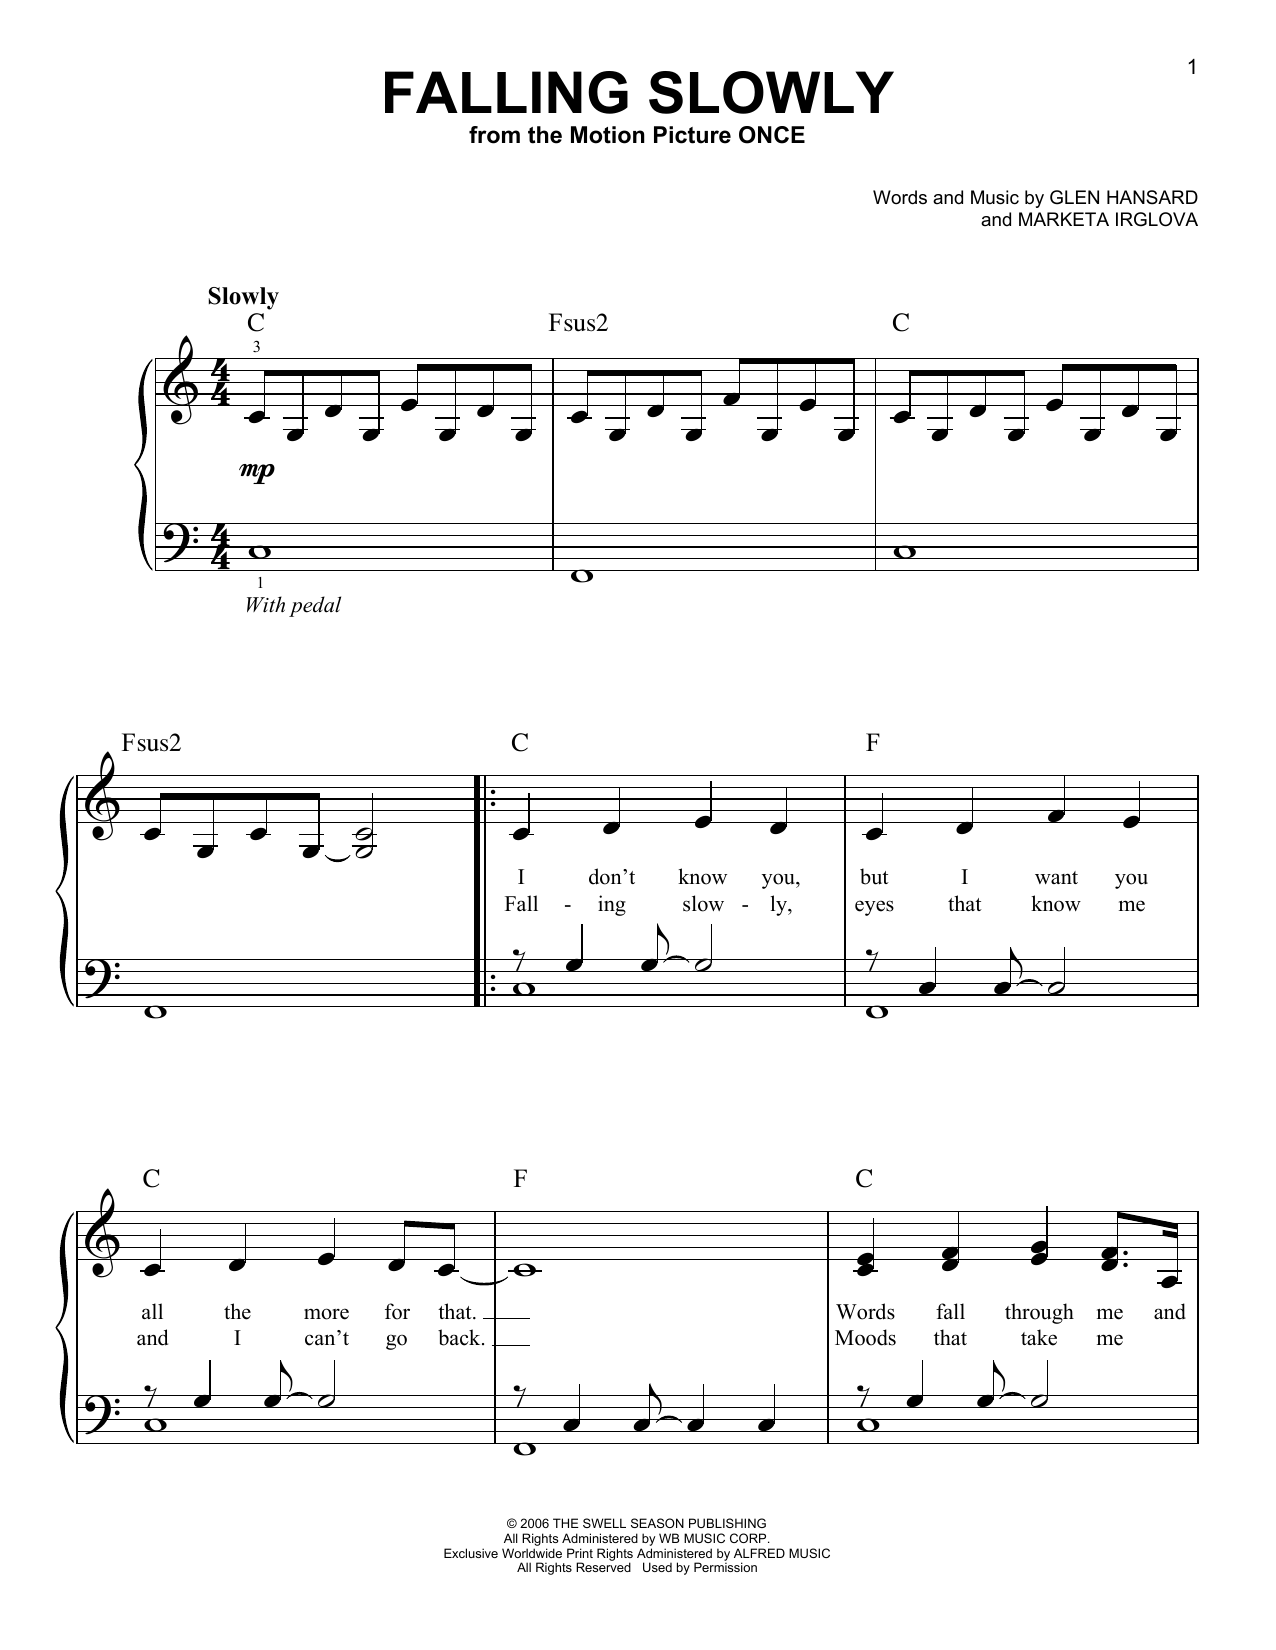 Glen Hansard & Marketa Irglova Falling Slowly (from Once) Sheet Music Notes & Chords for SPREP - Download or Print PDF